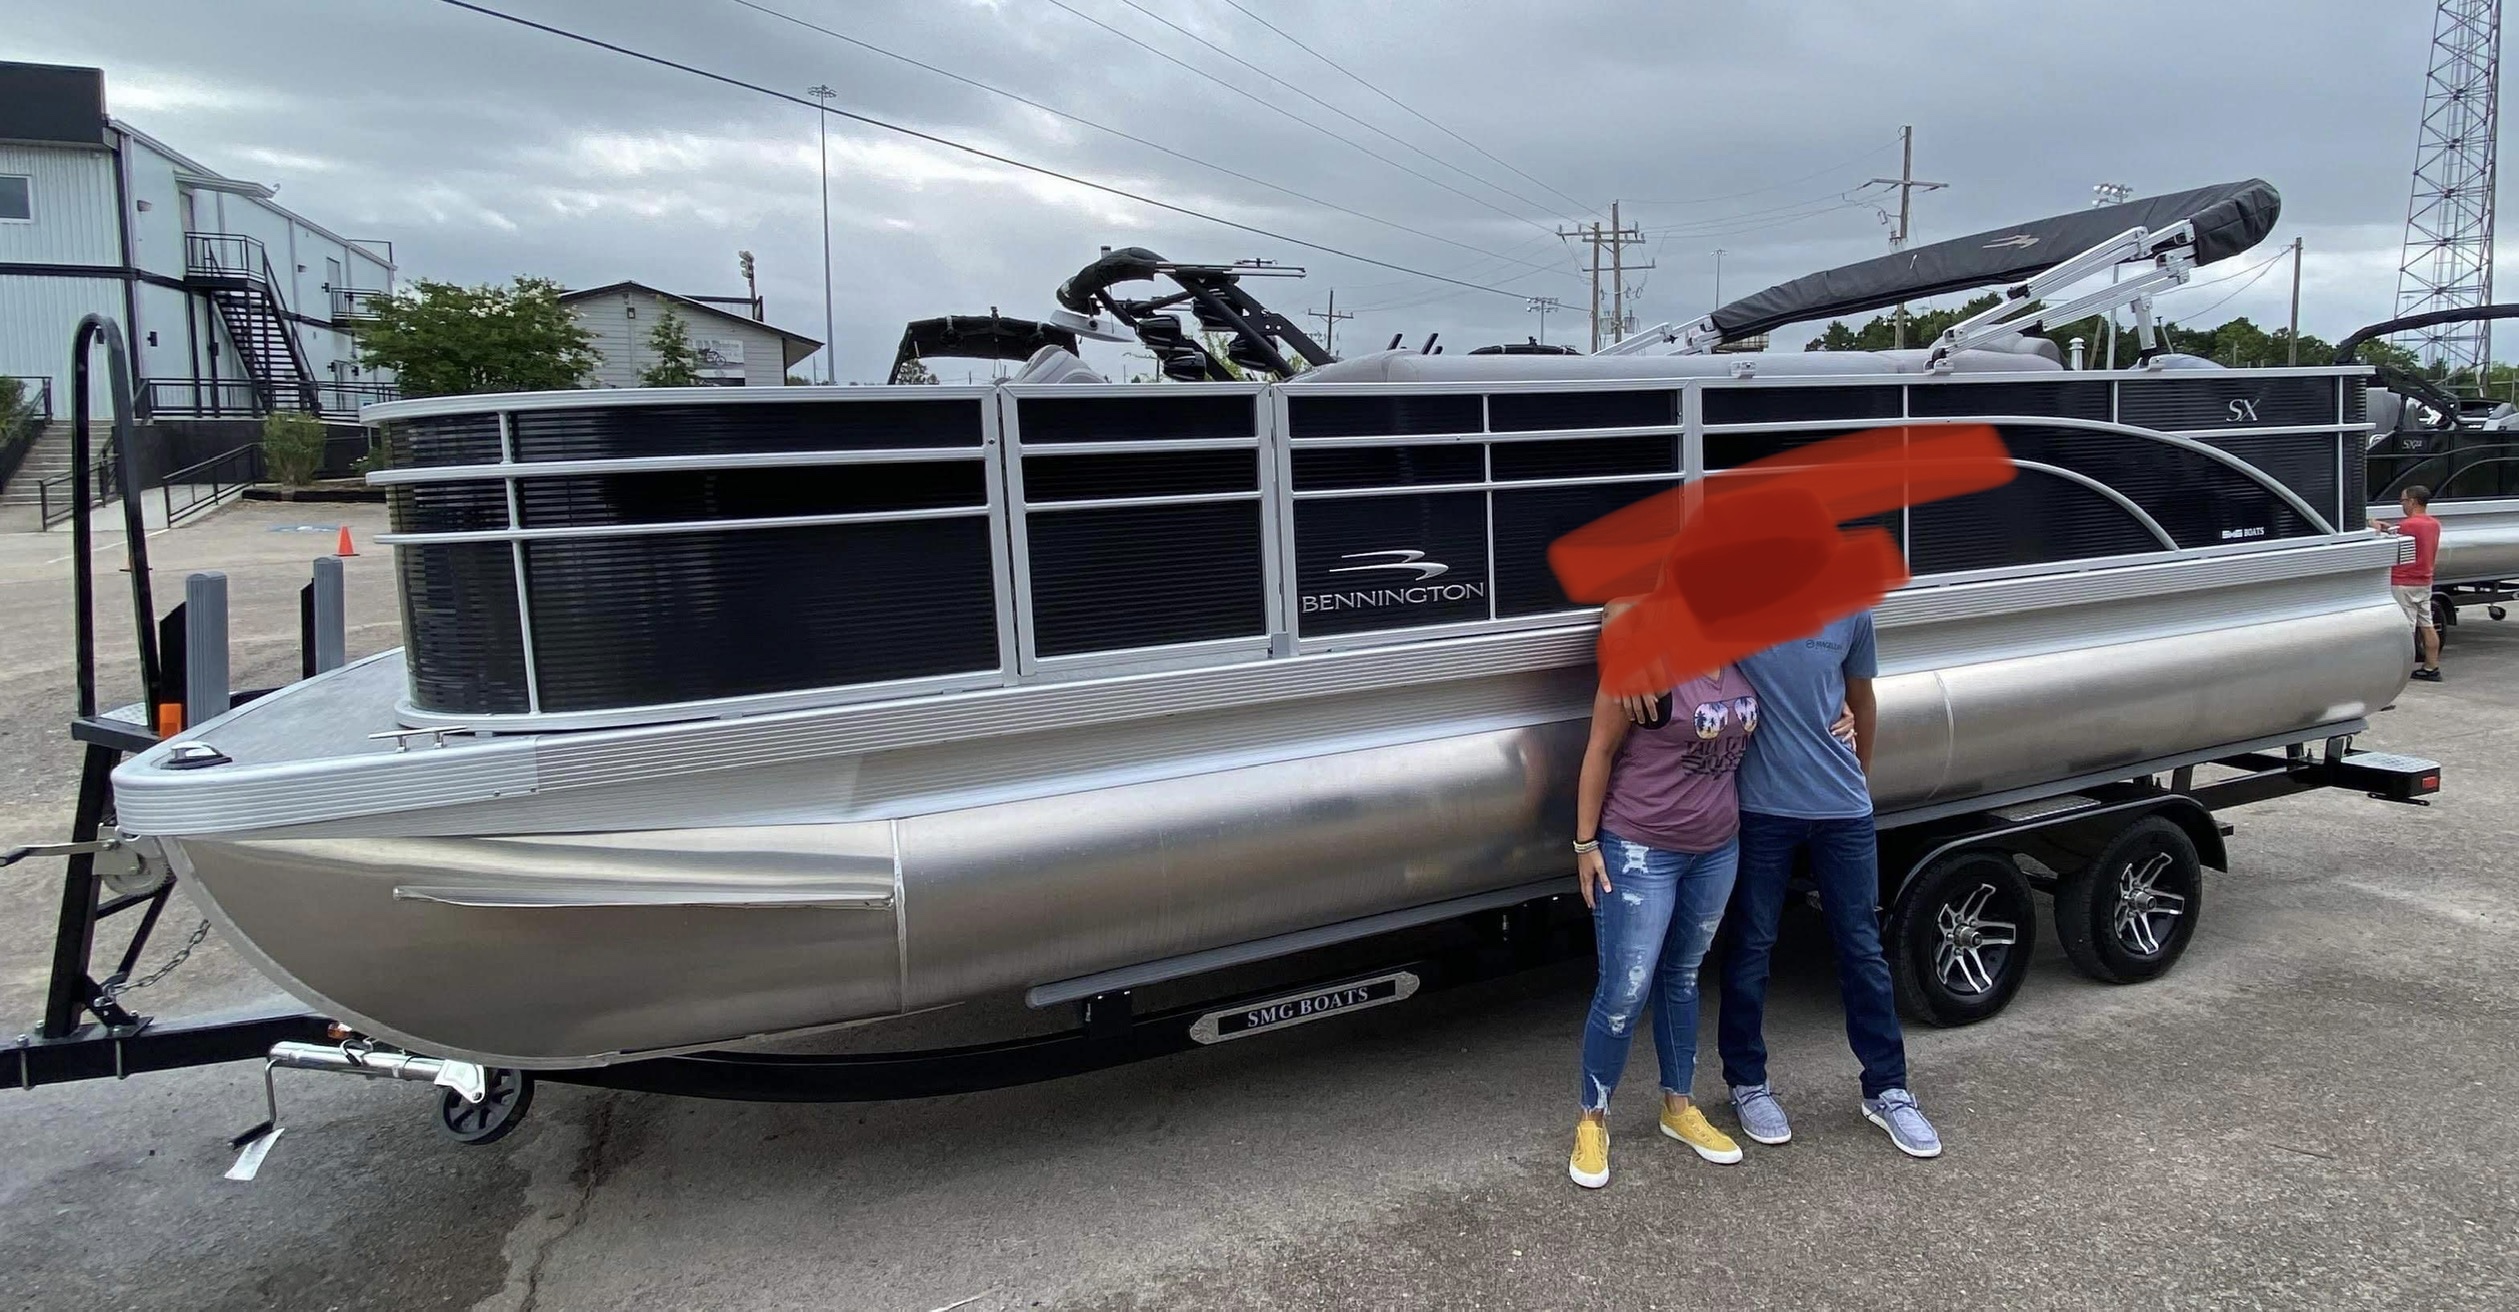 2020 Bennington 23 SFX Pontoon Boat for sale in Vidor, TX - image 1 